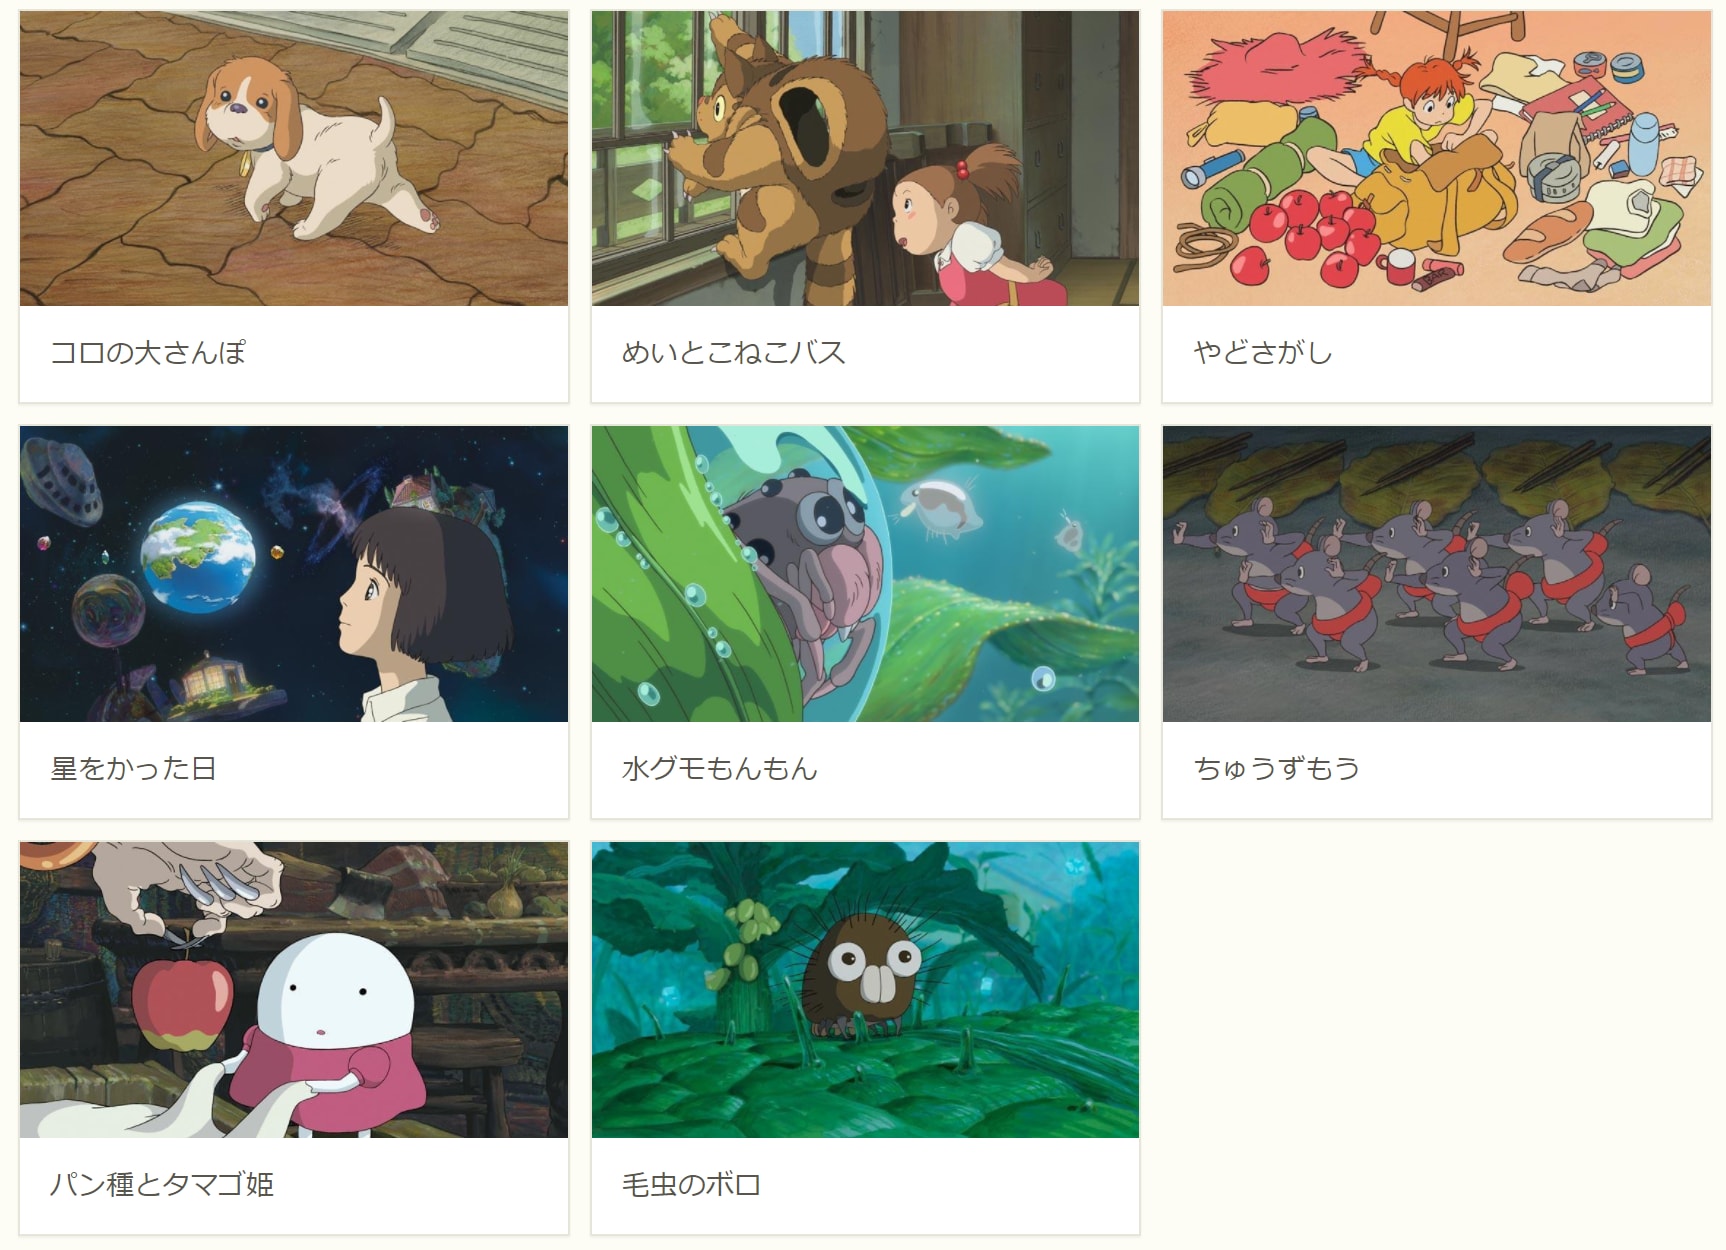 Ghibli Museum - featured short films